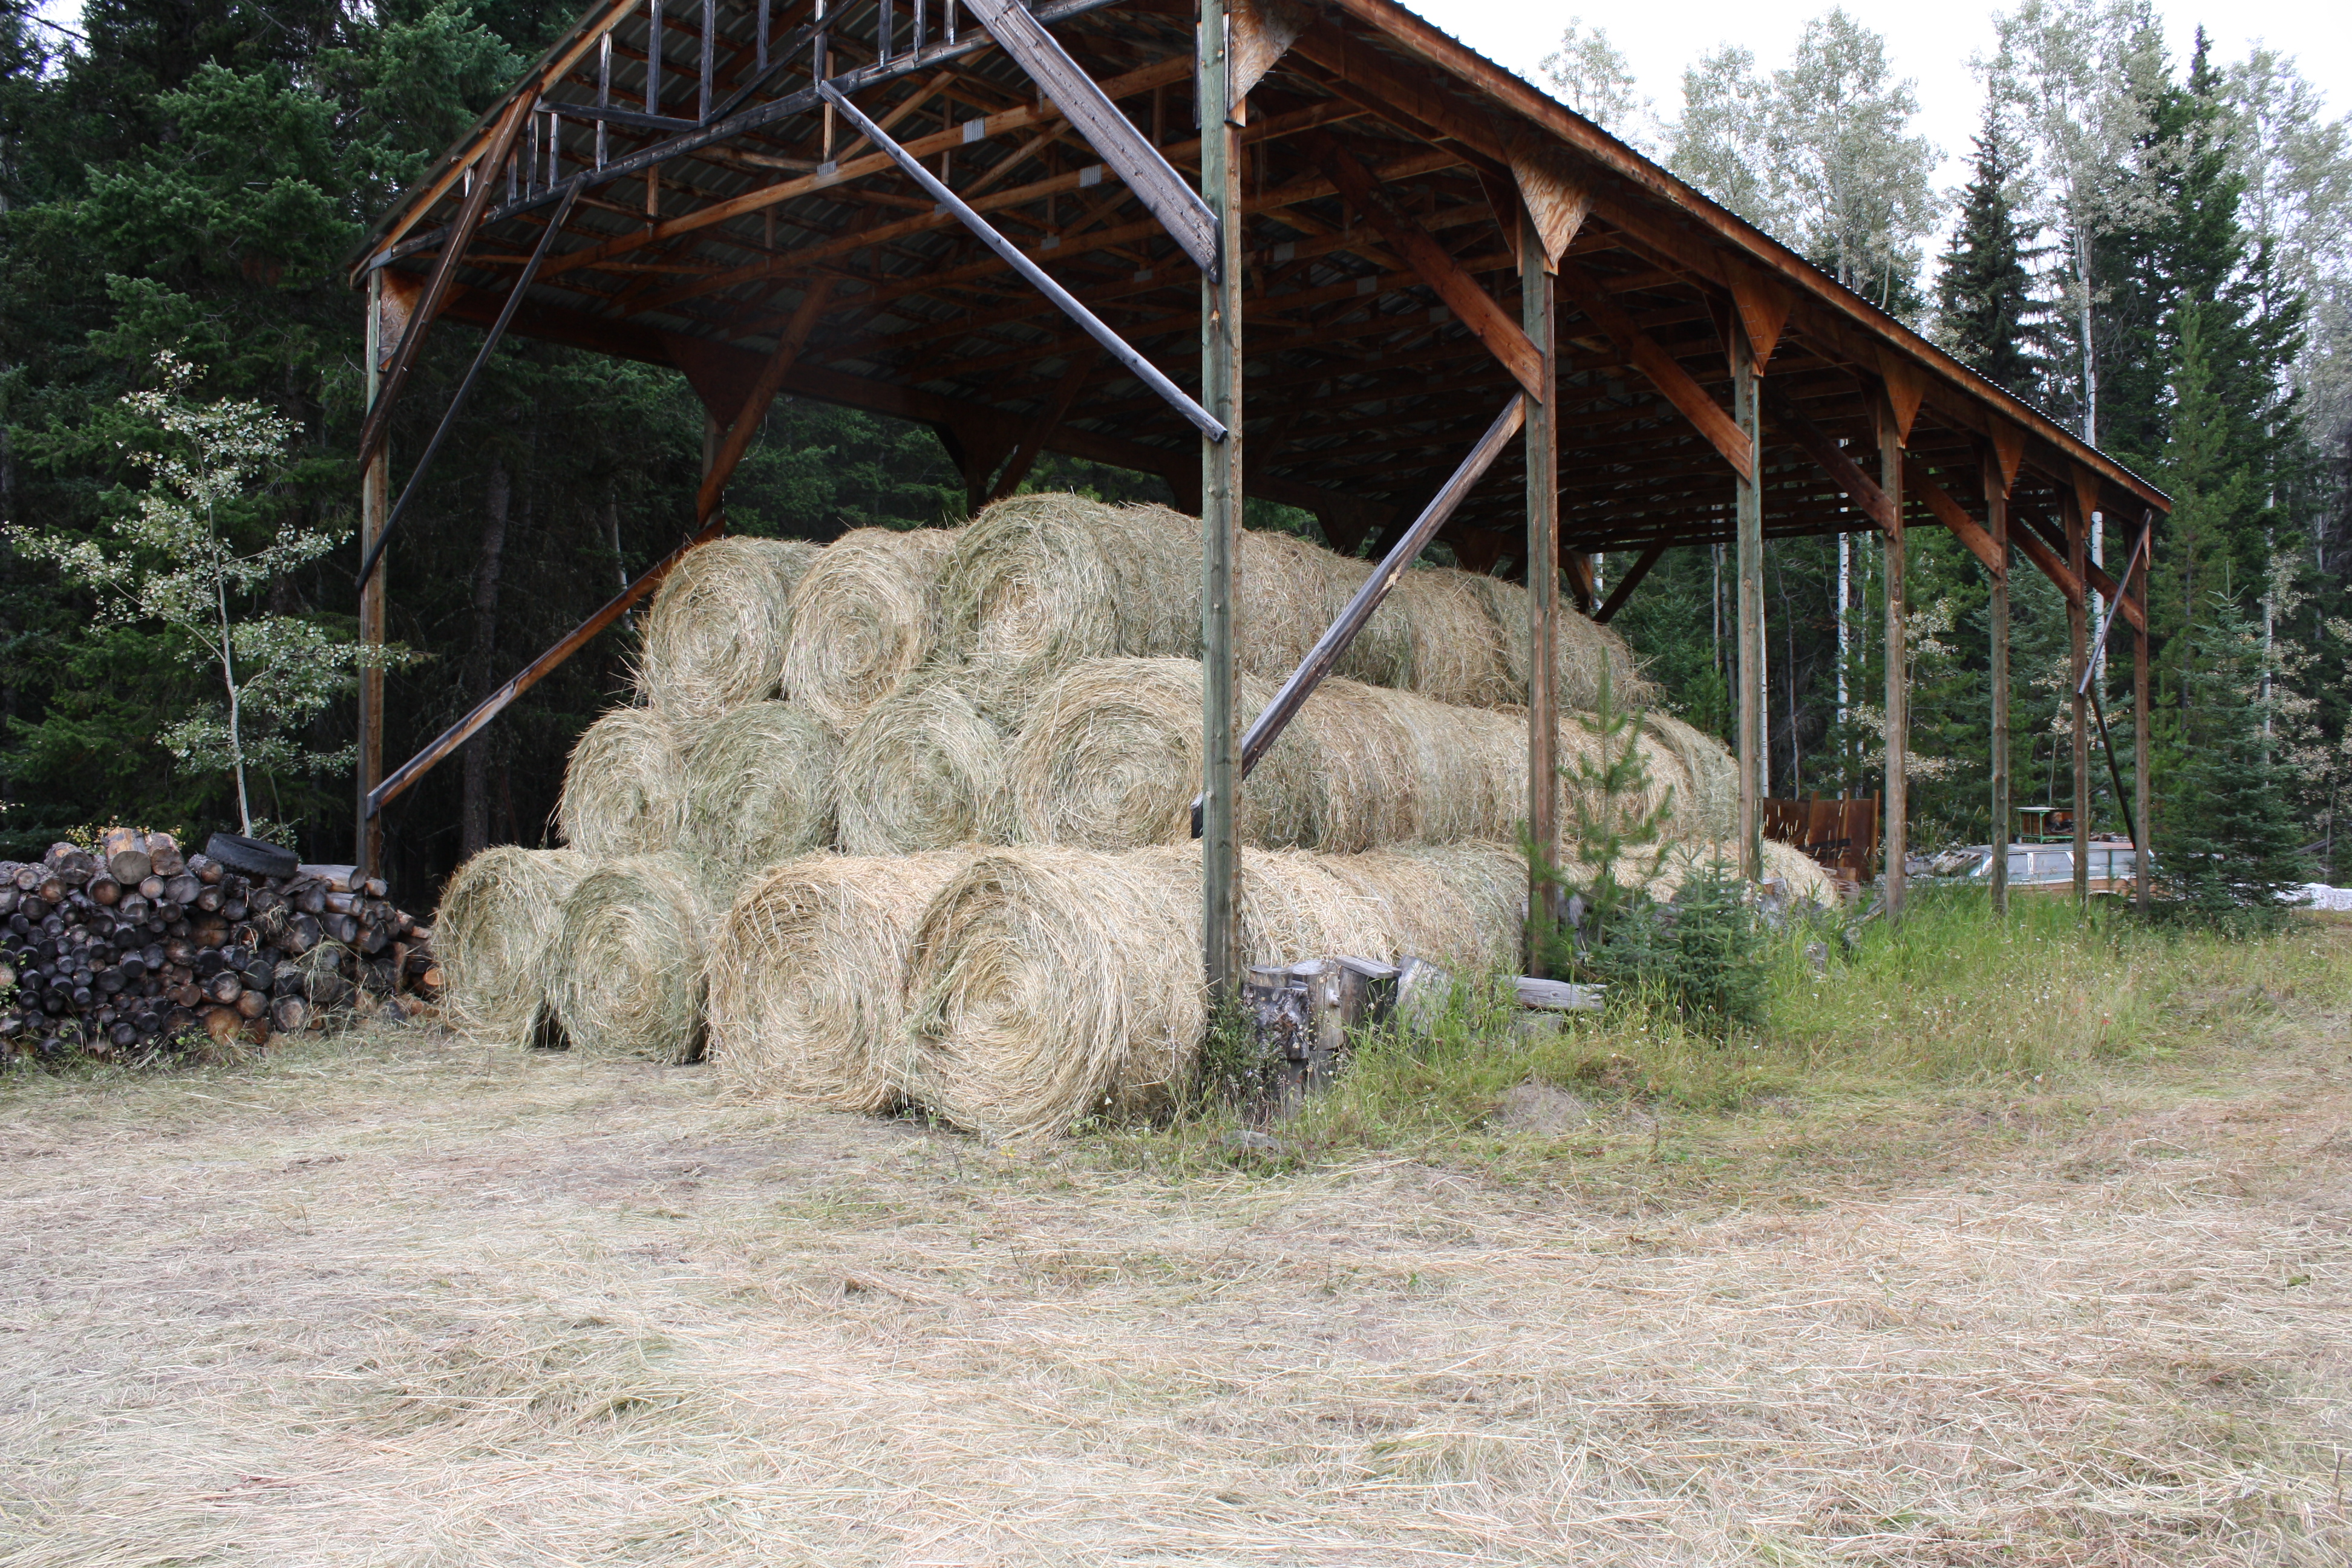 Hay for sale at Buffalo Creek, 2011